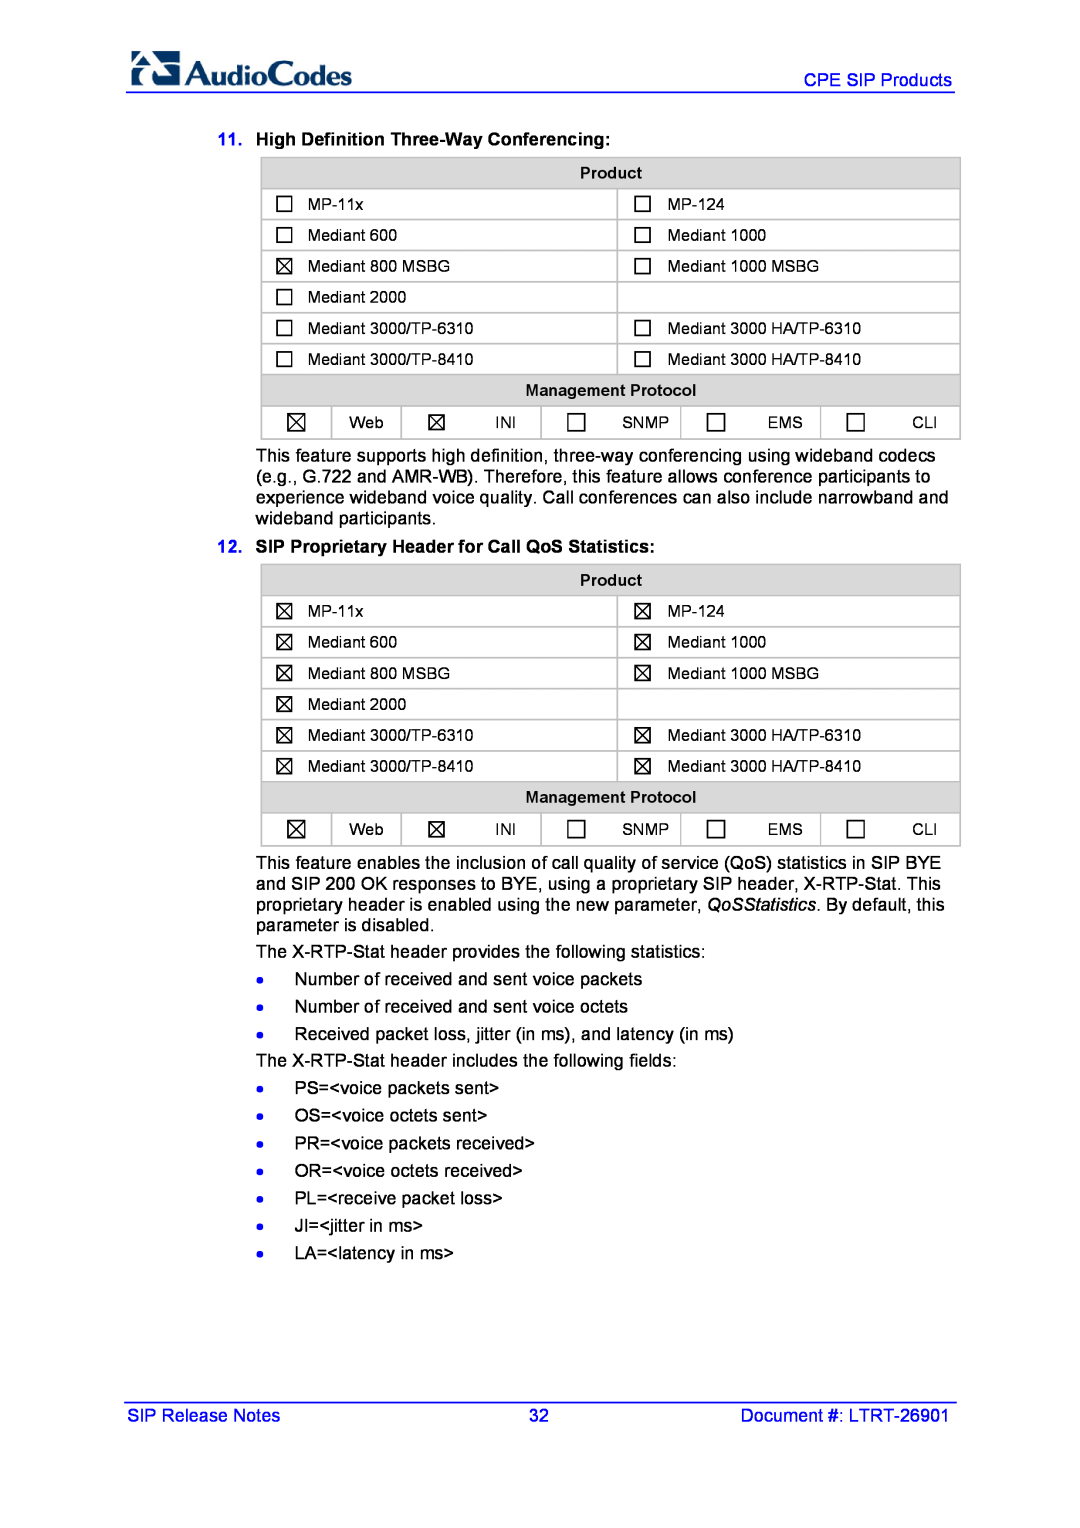 AudioControl VERSION 6.2 manual High Definition Three-Way Conferencing, SIP Proprietary Header for Call QoS Statistics 